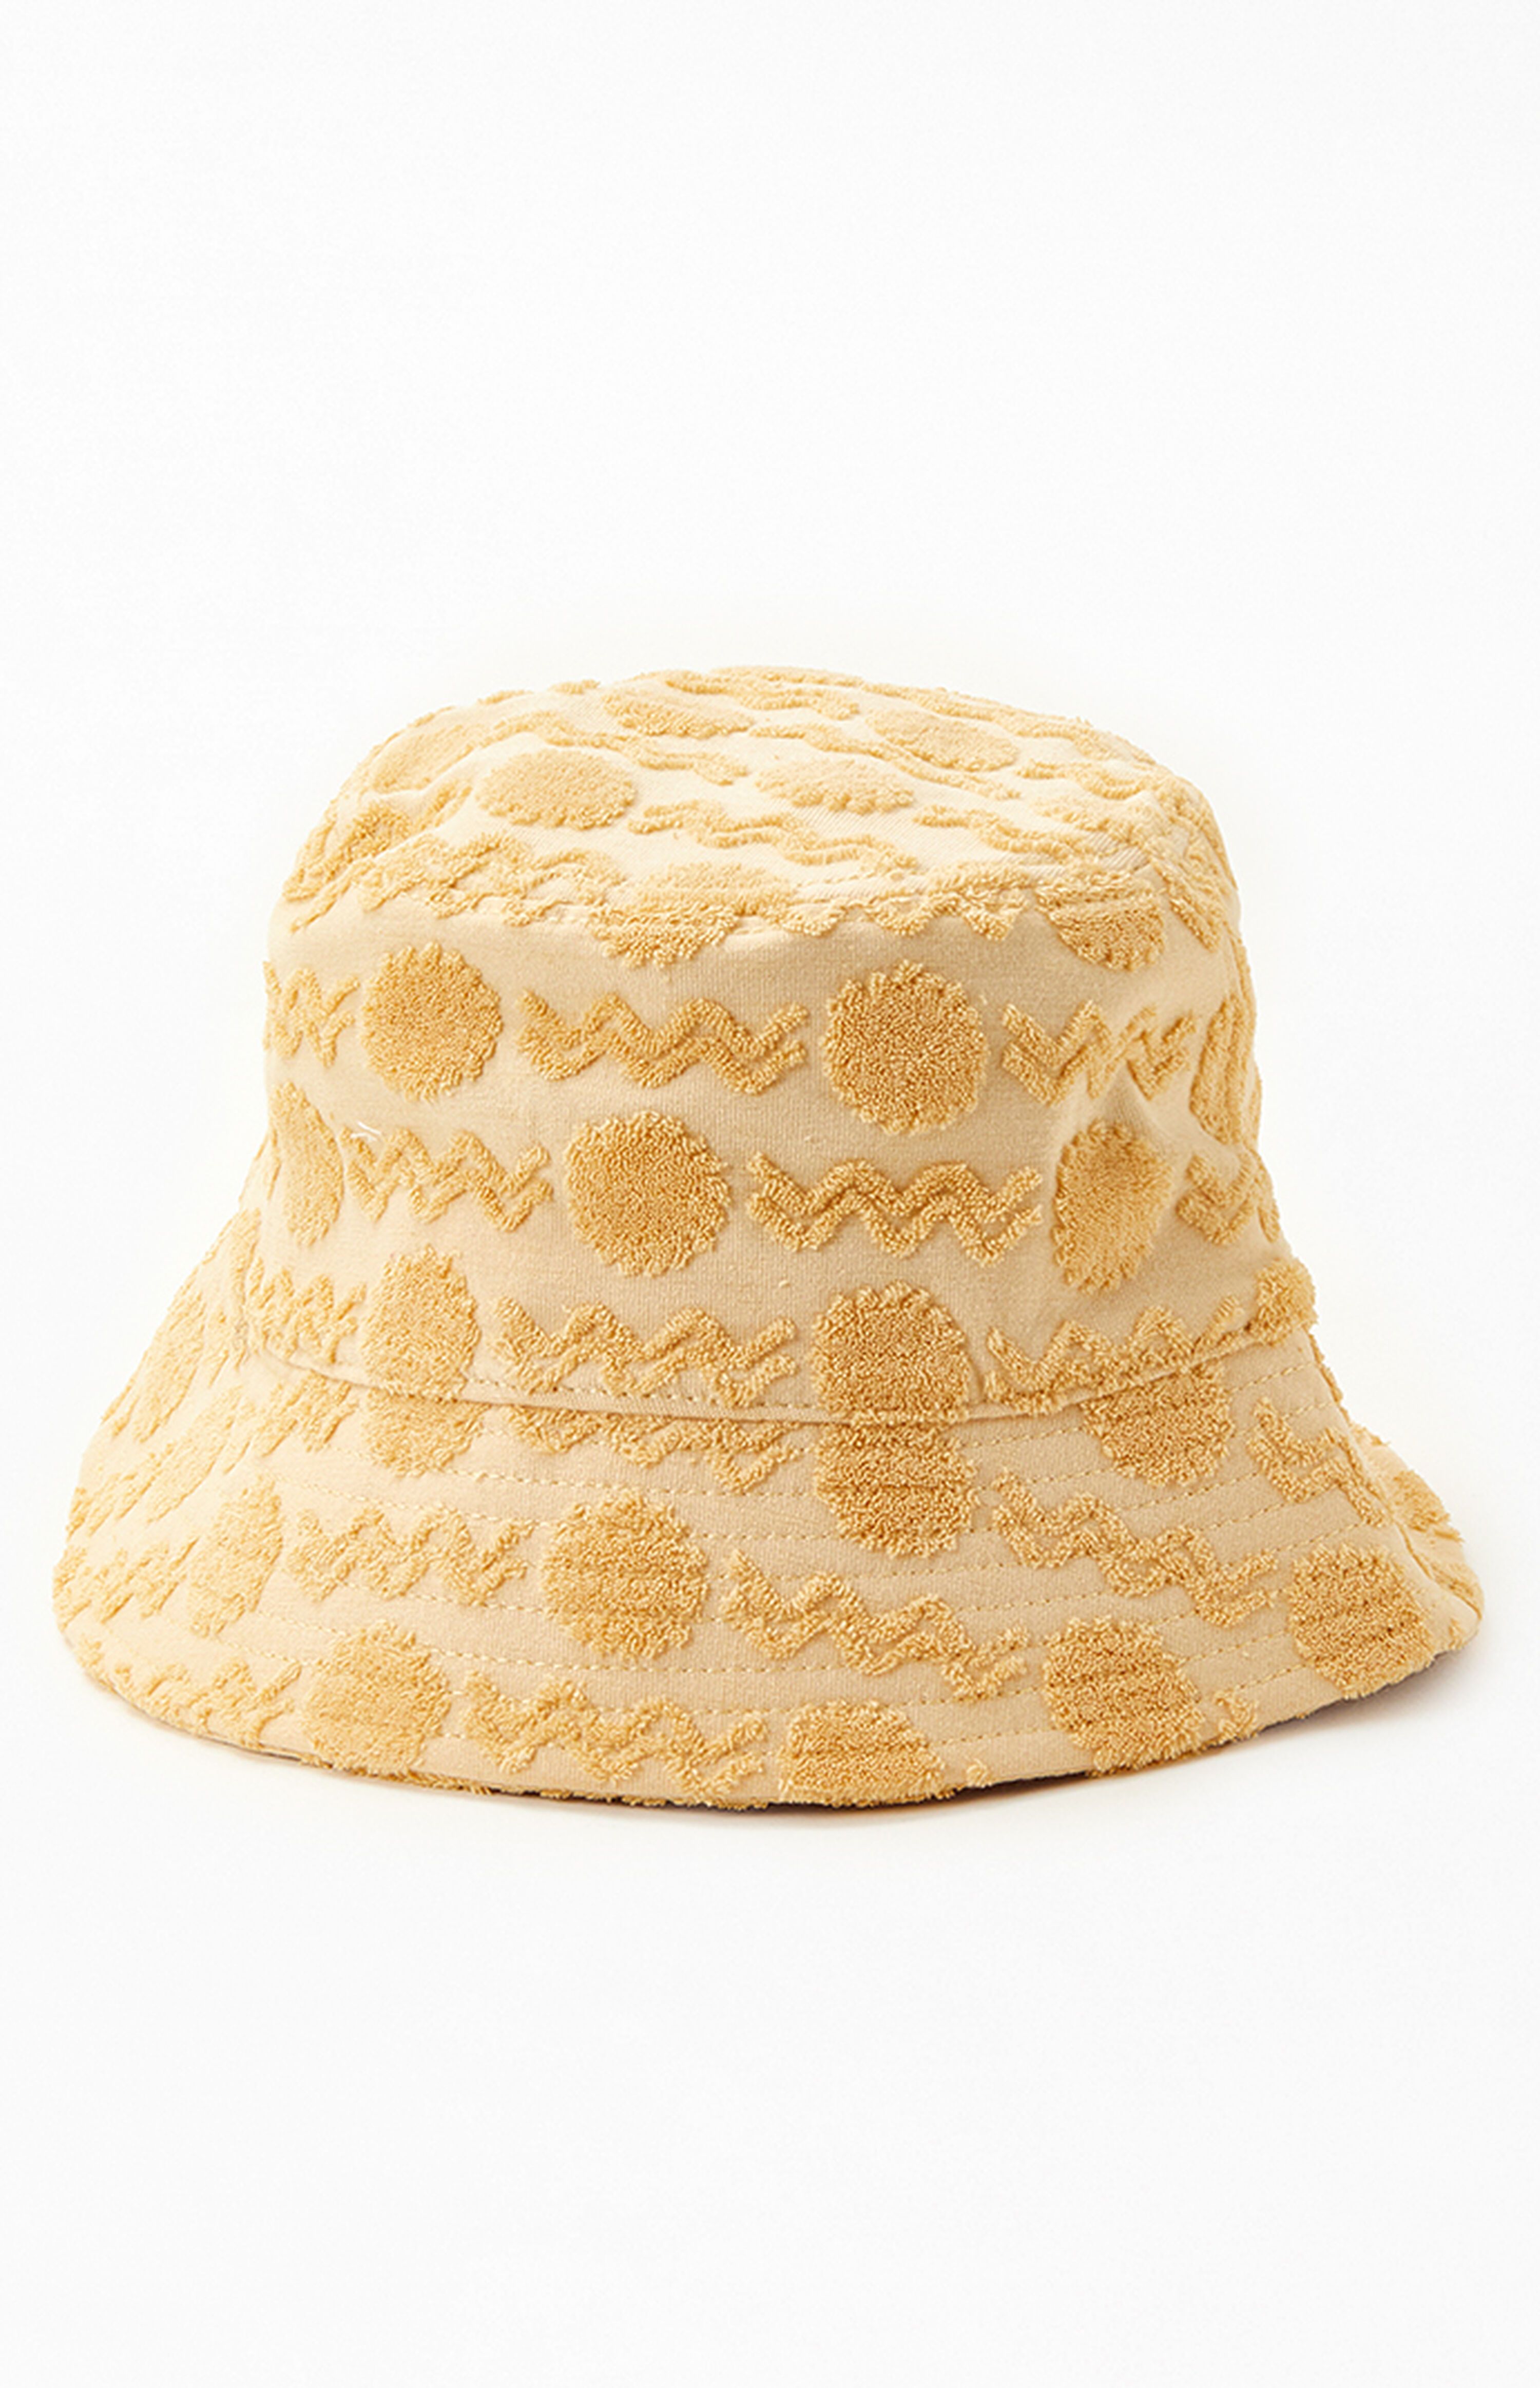 PacSun Sun Daze Bucket Hat | PacSun | PacSun